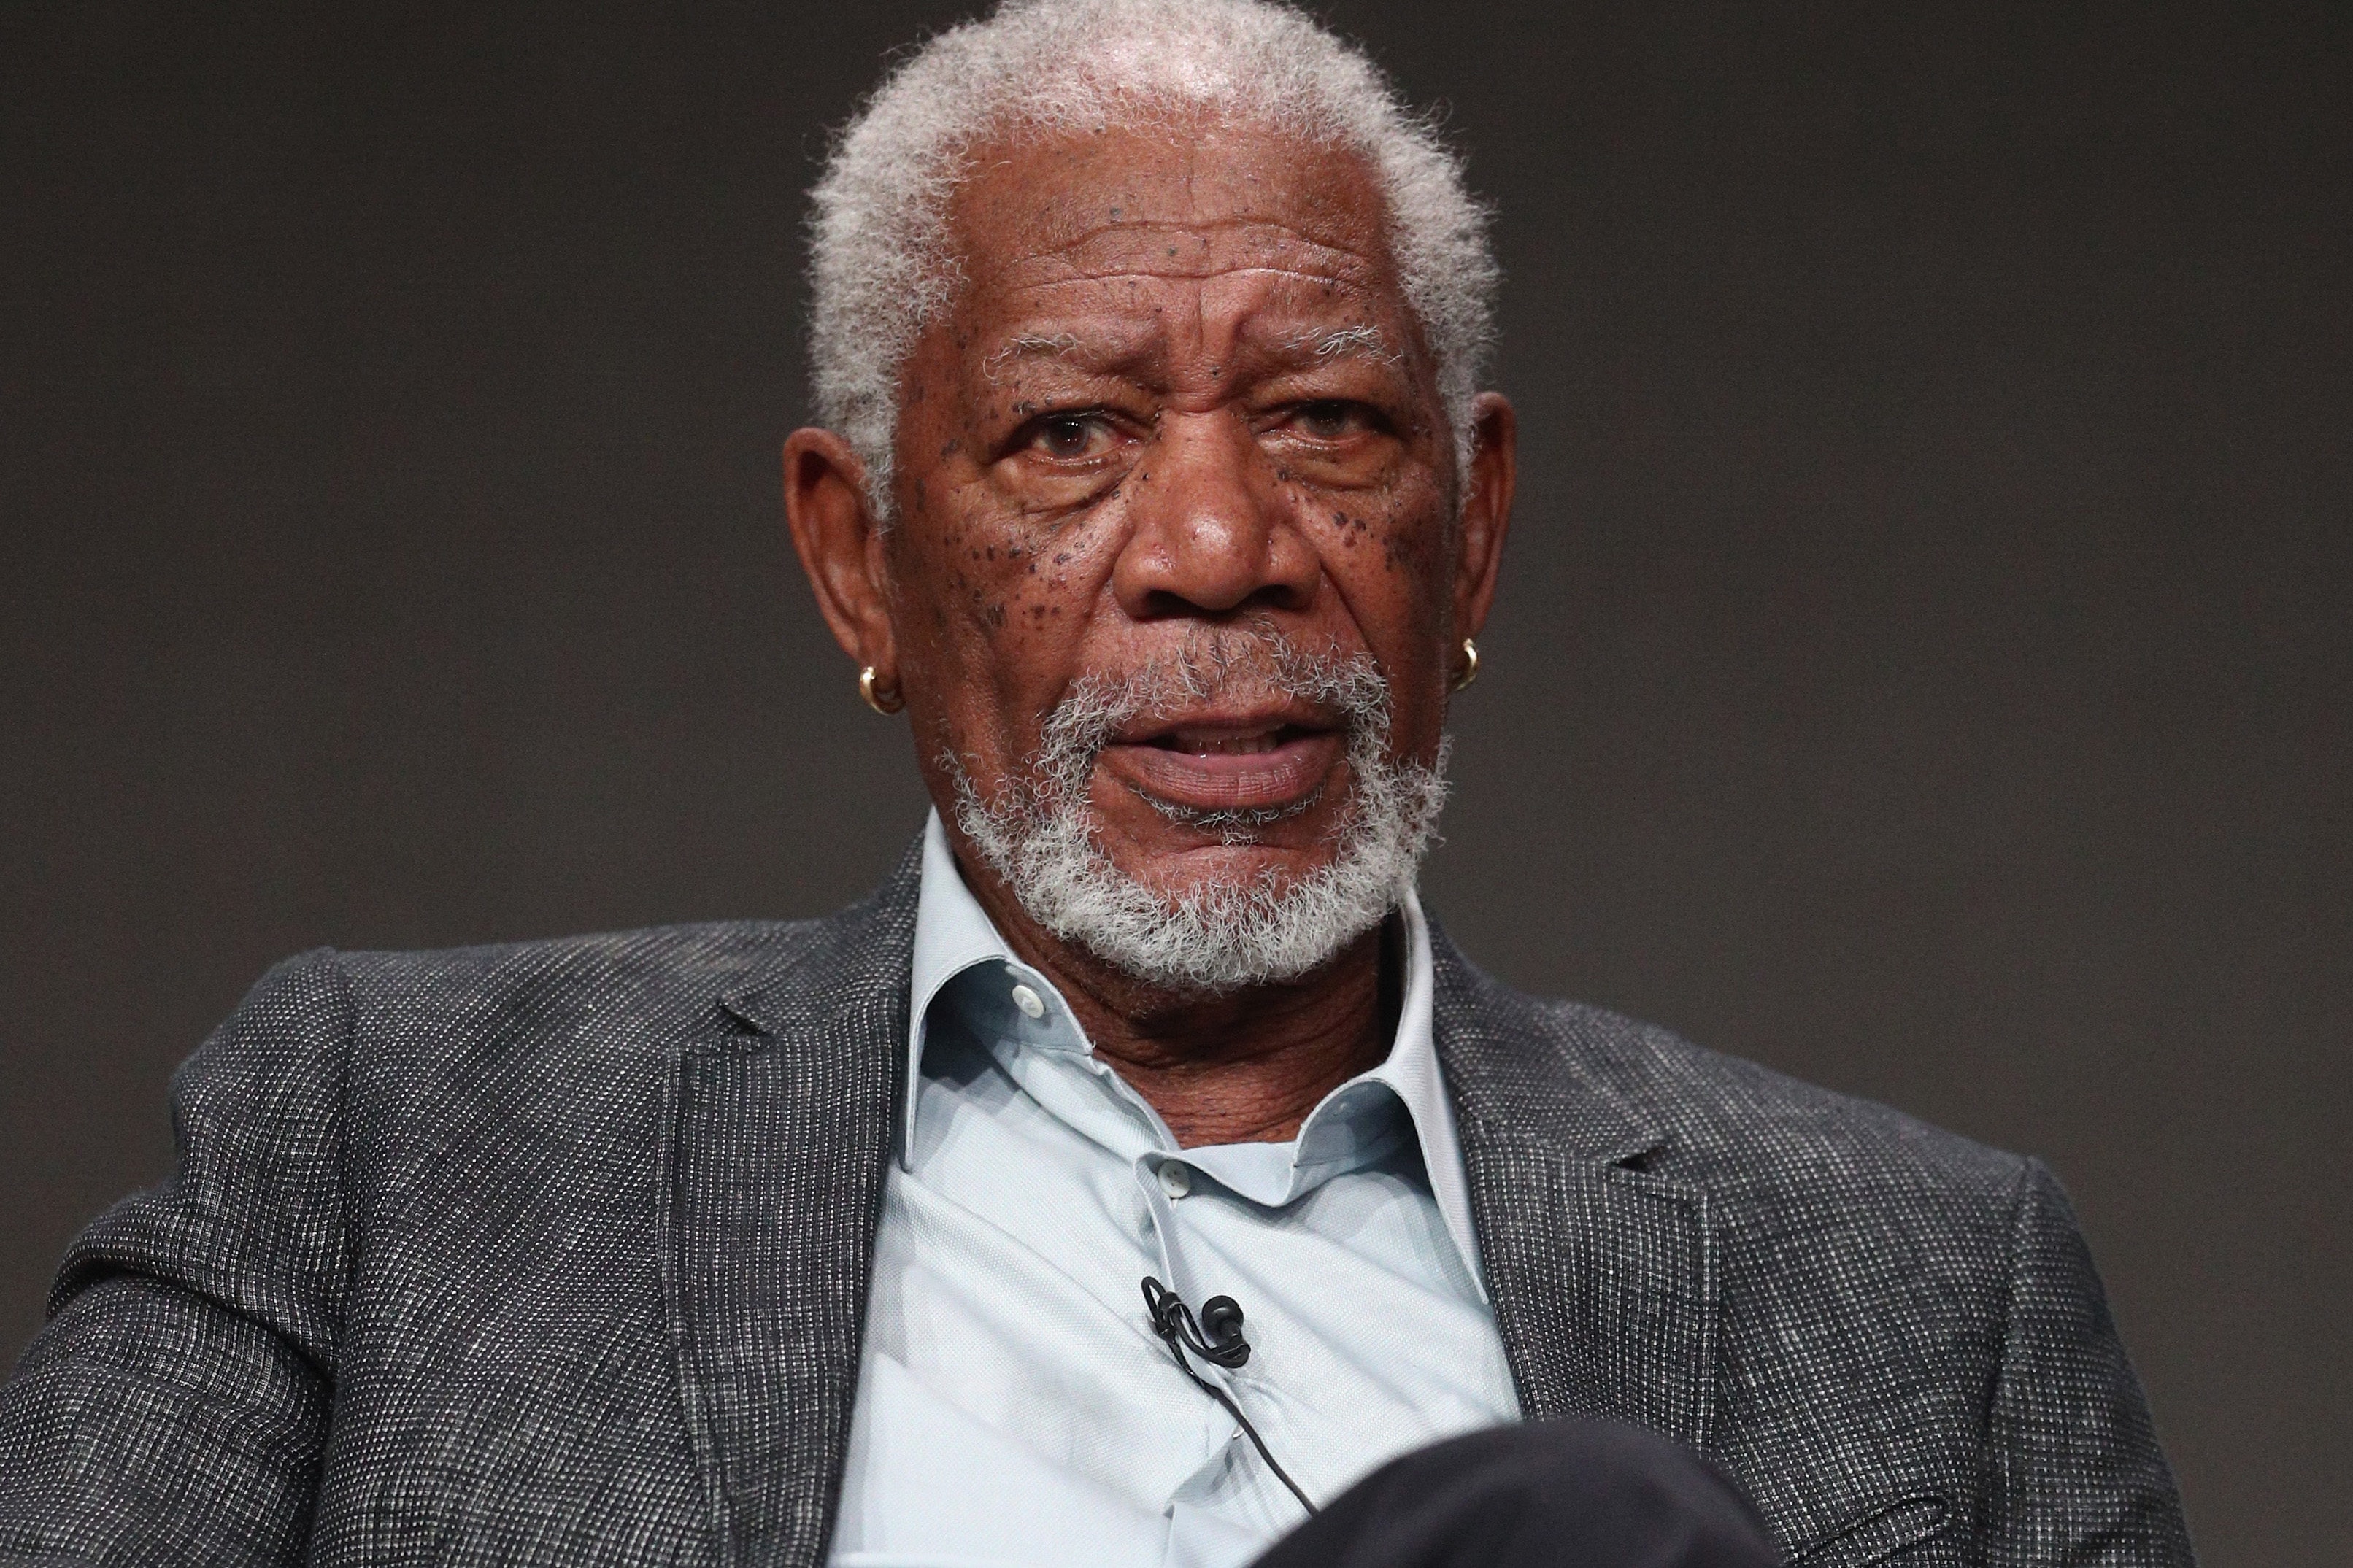 Morgan Freeman 再度發表聲明稱自己「從未性騷擾女性」